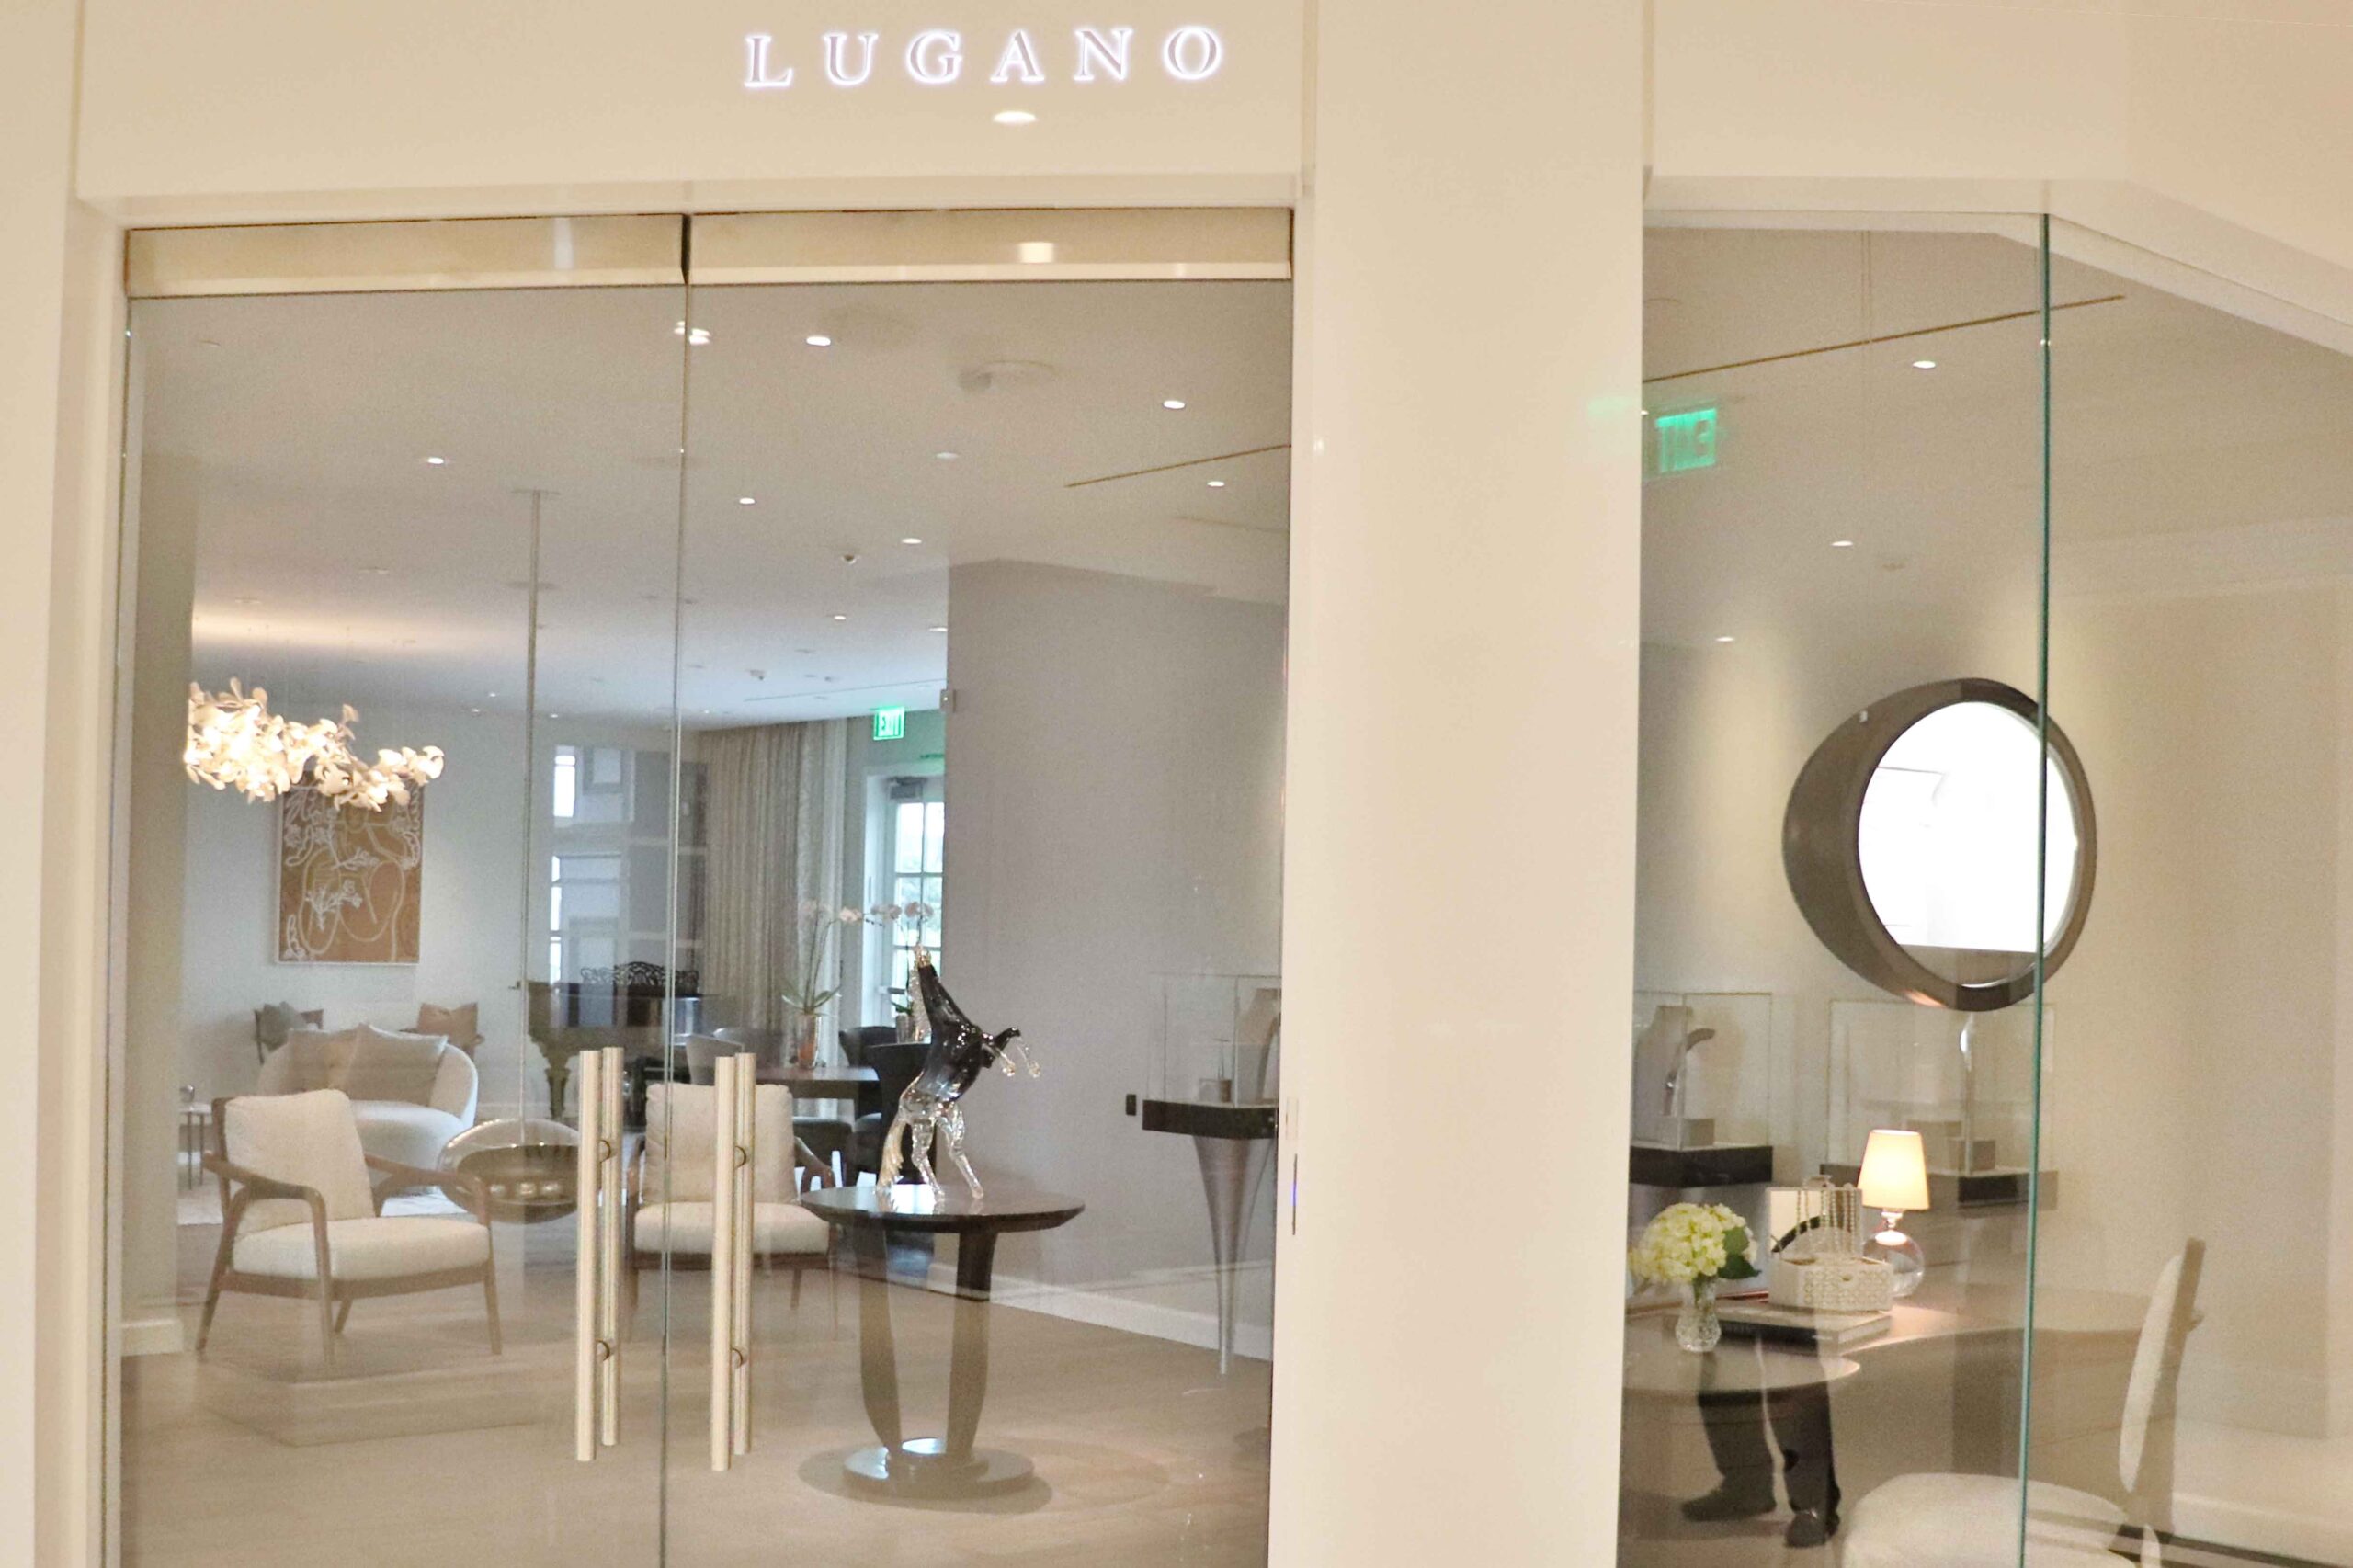 Lugano diamonds at WEC